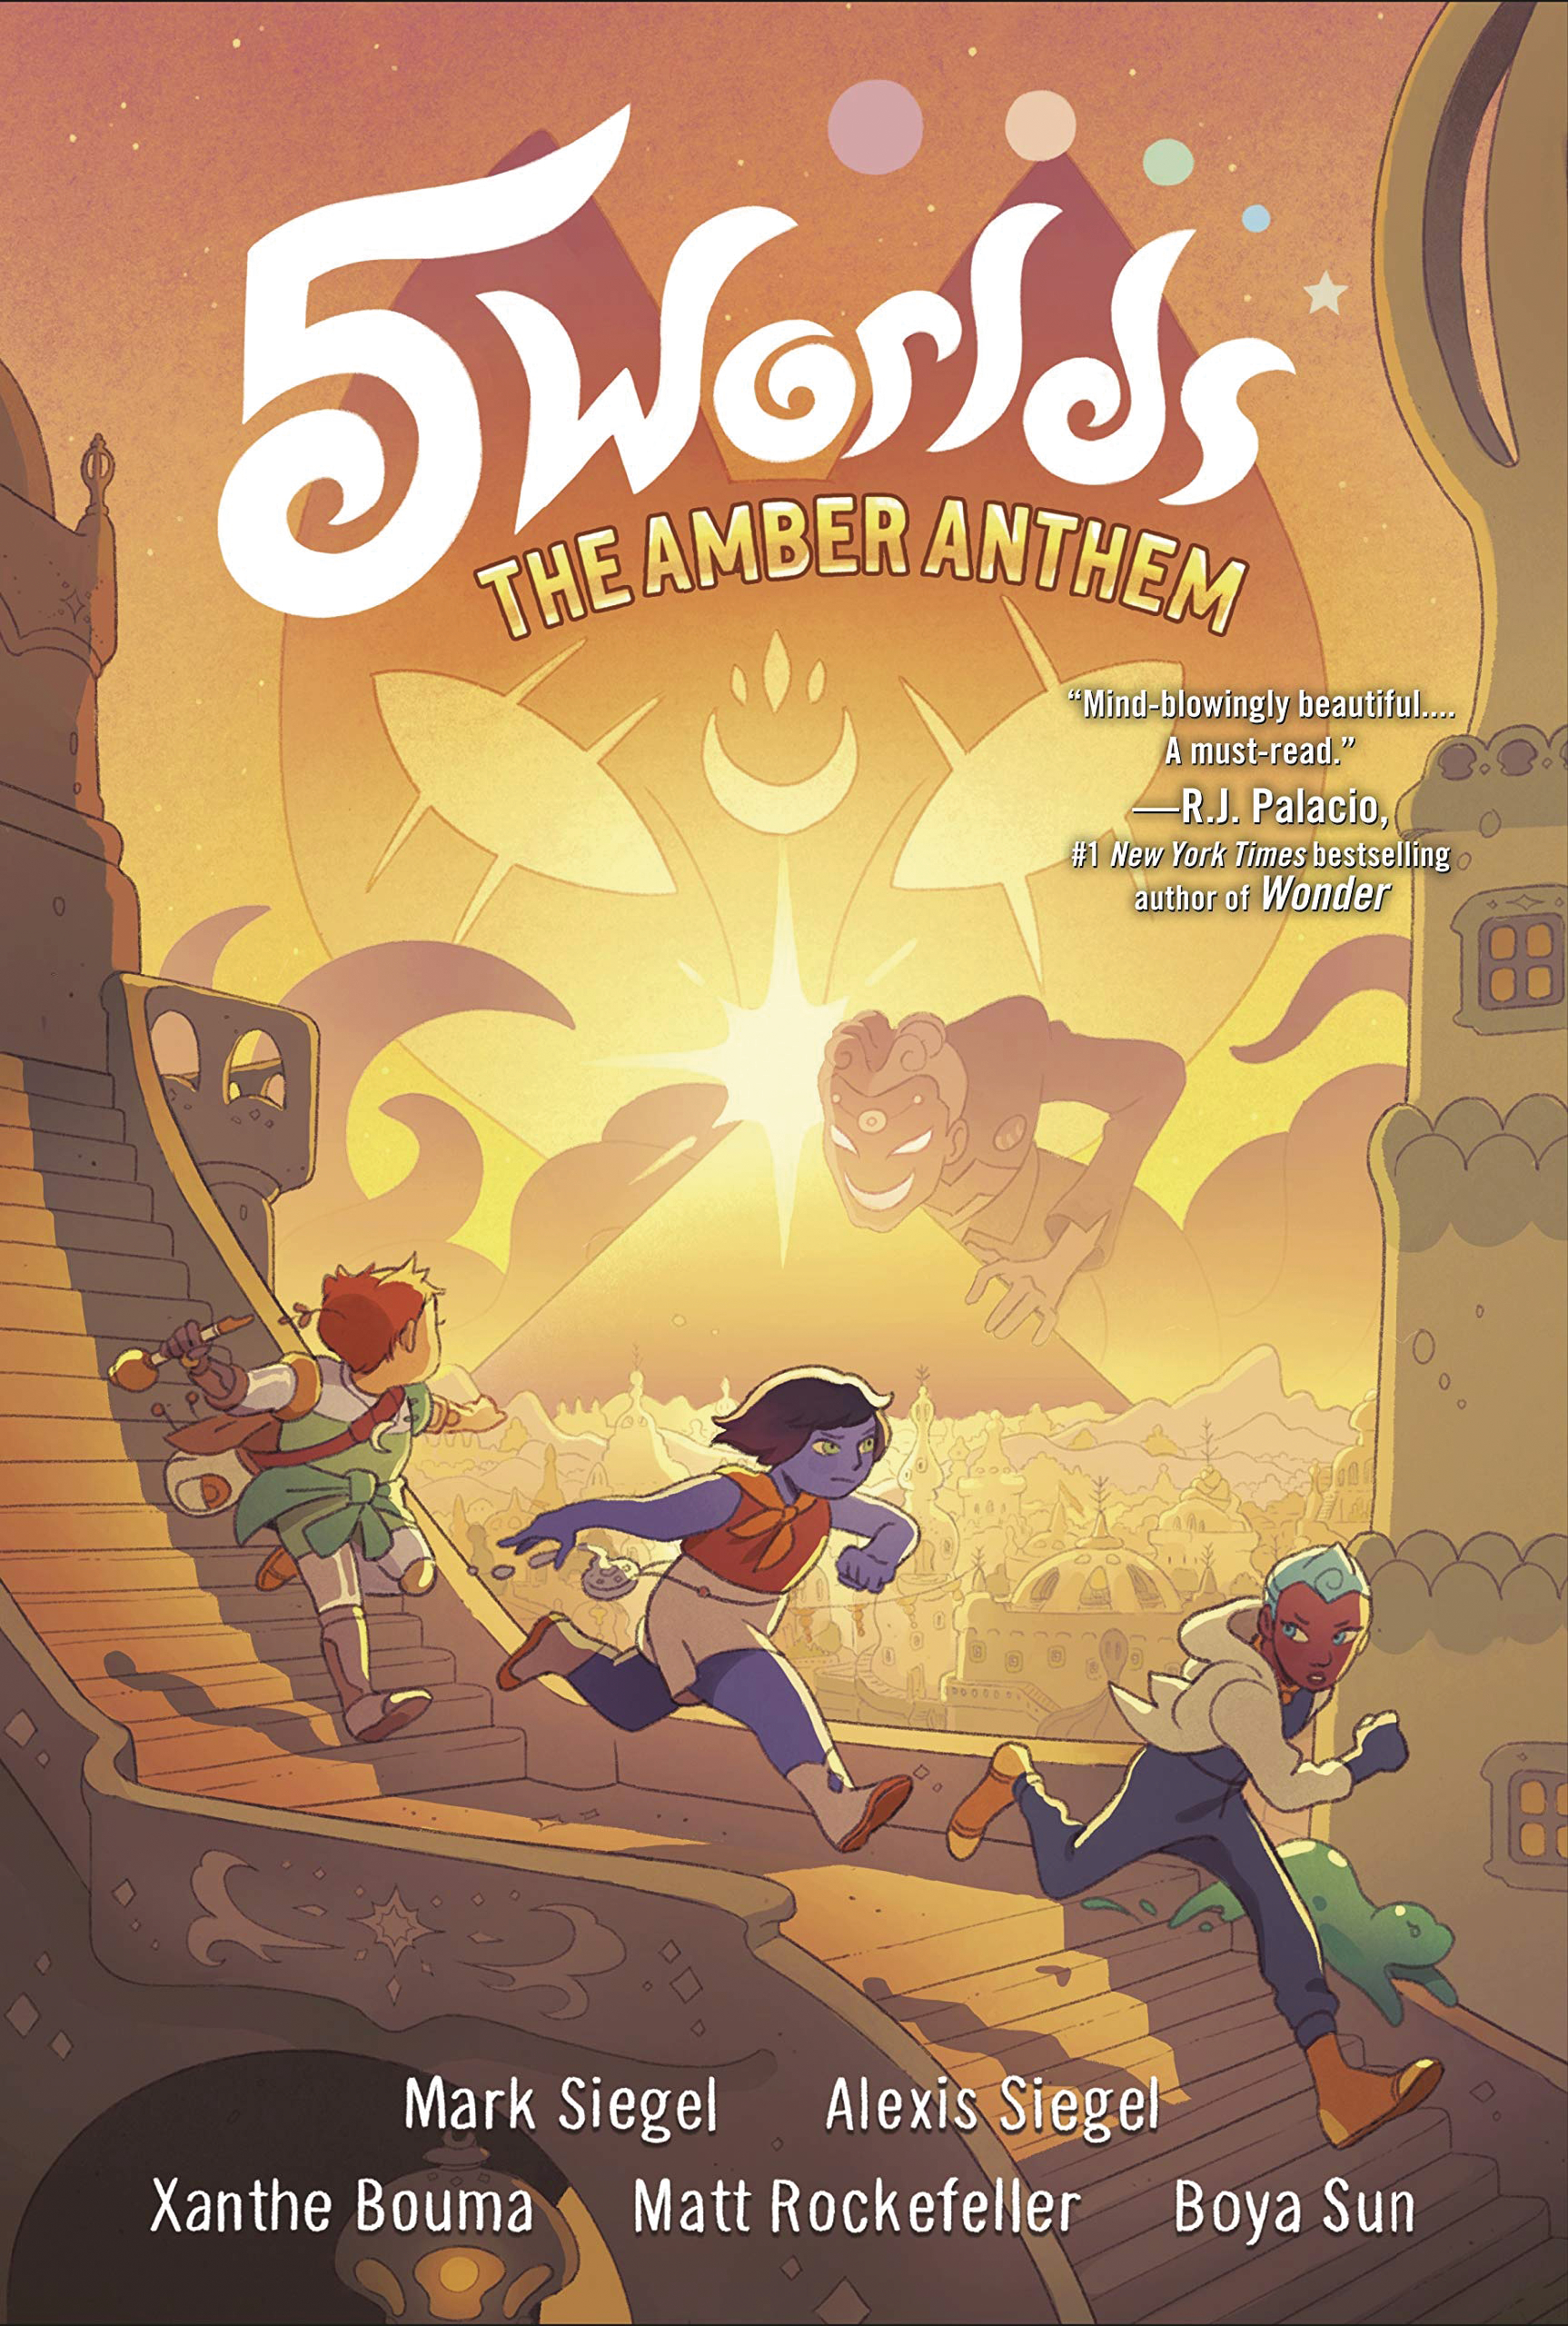 5 Worlds Hardcover Graphic Novel Volume 4 Amber Anthem